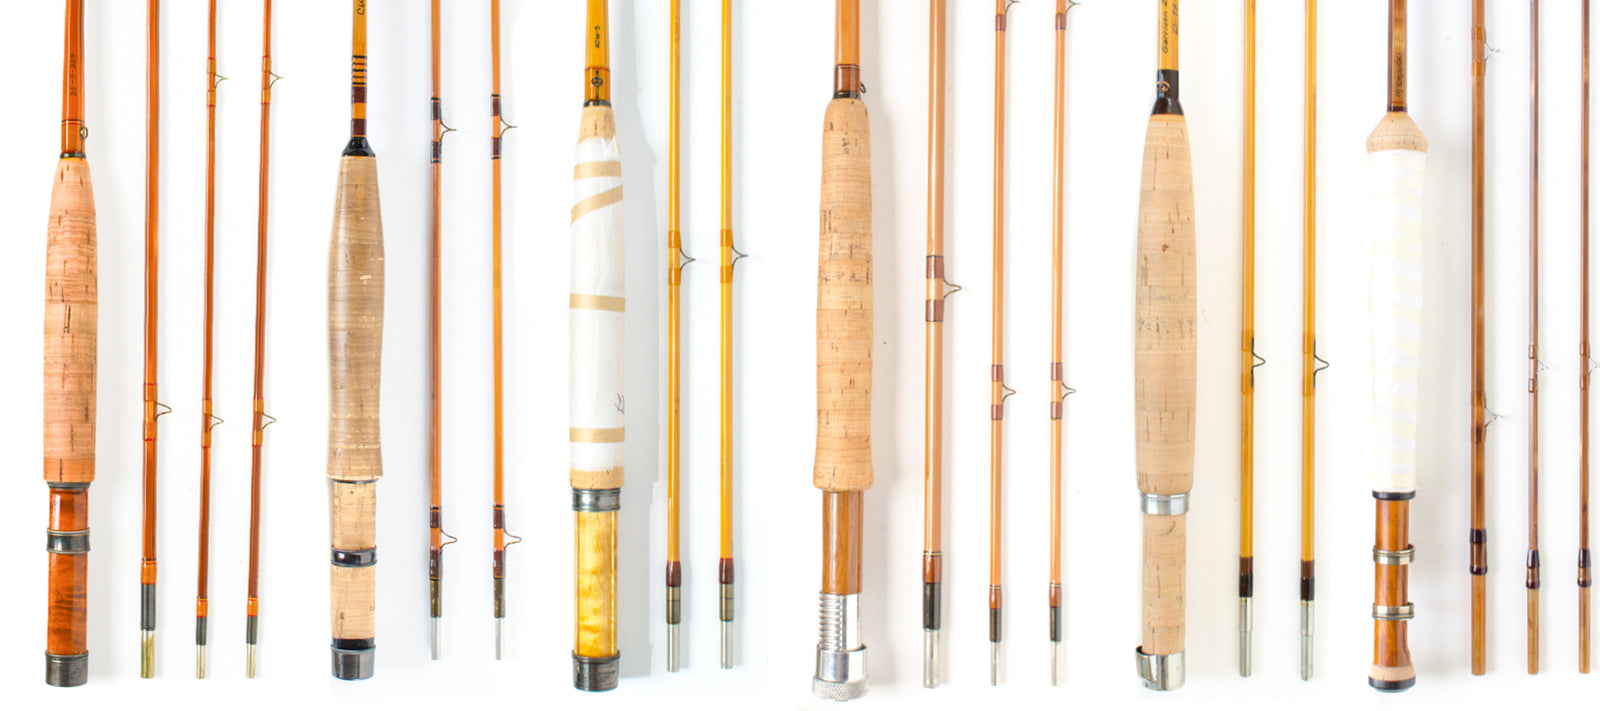 Bamboo Fly Rods and Classic Fishing Tackle - Spinoza Rod Company